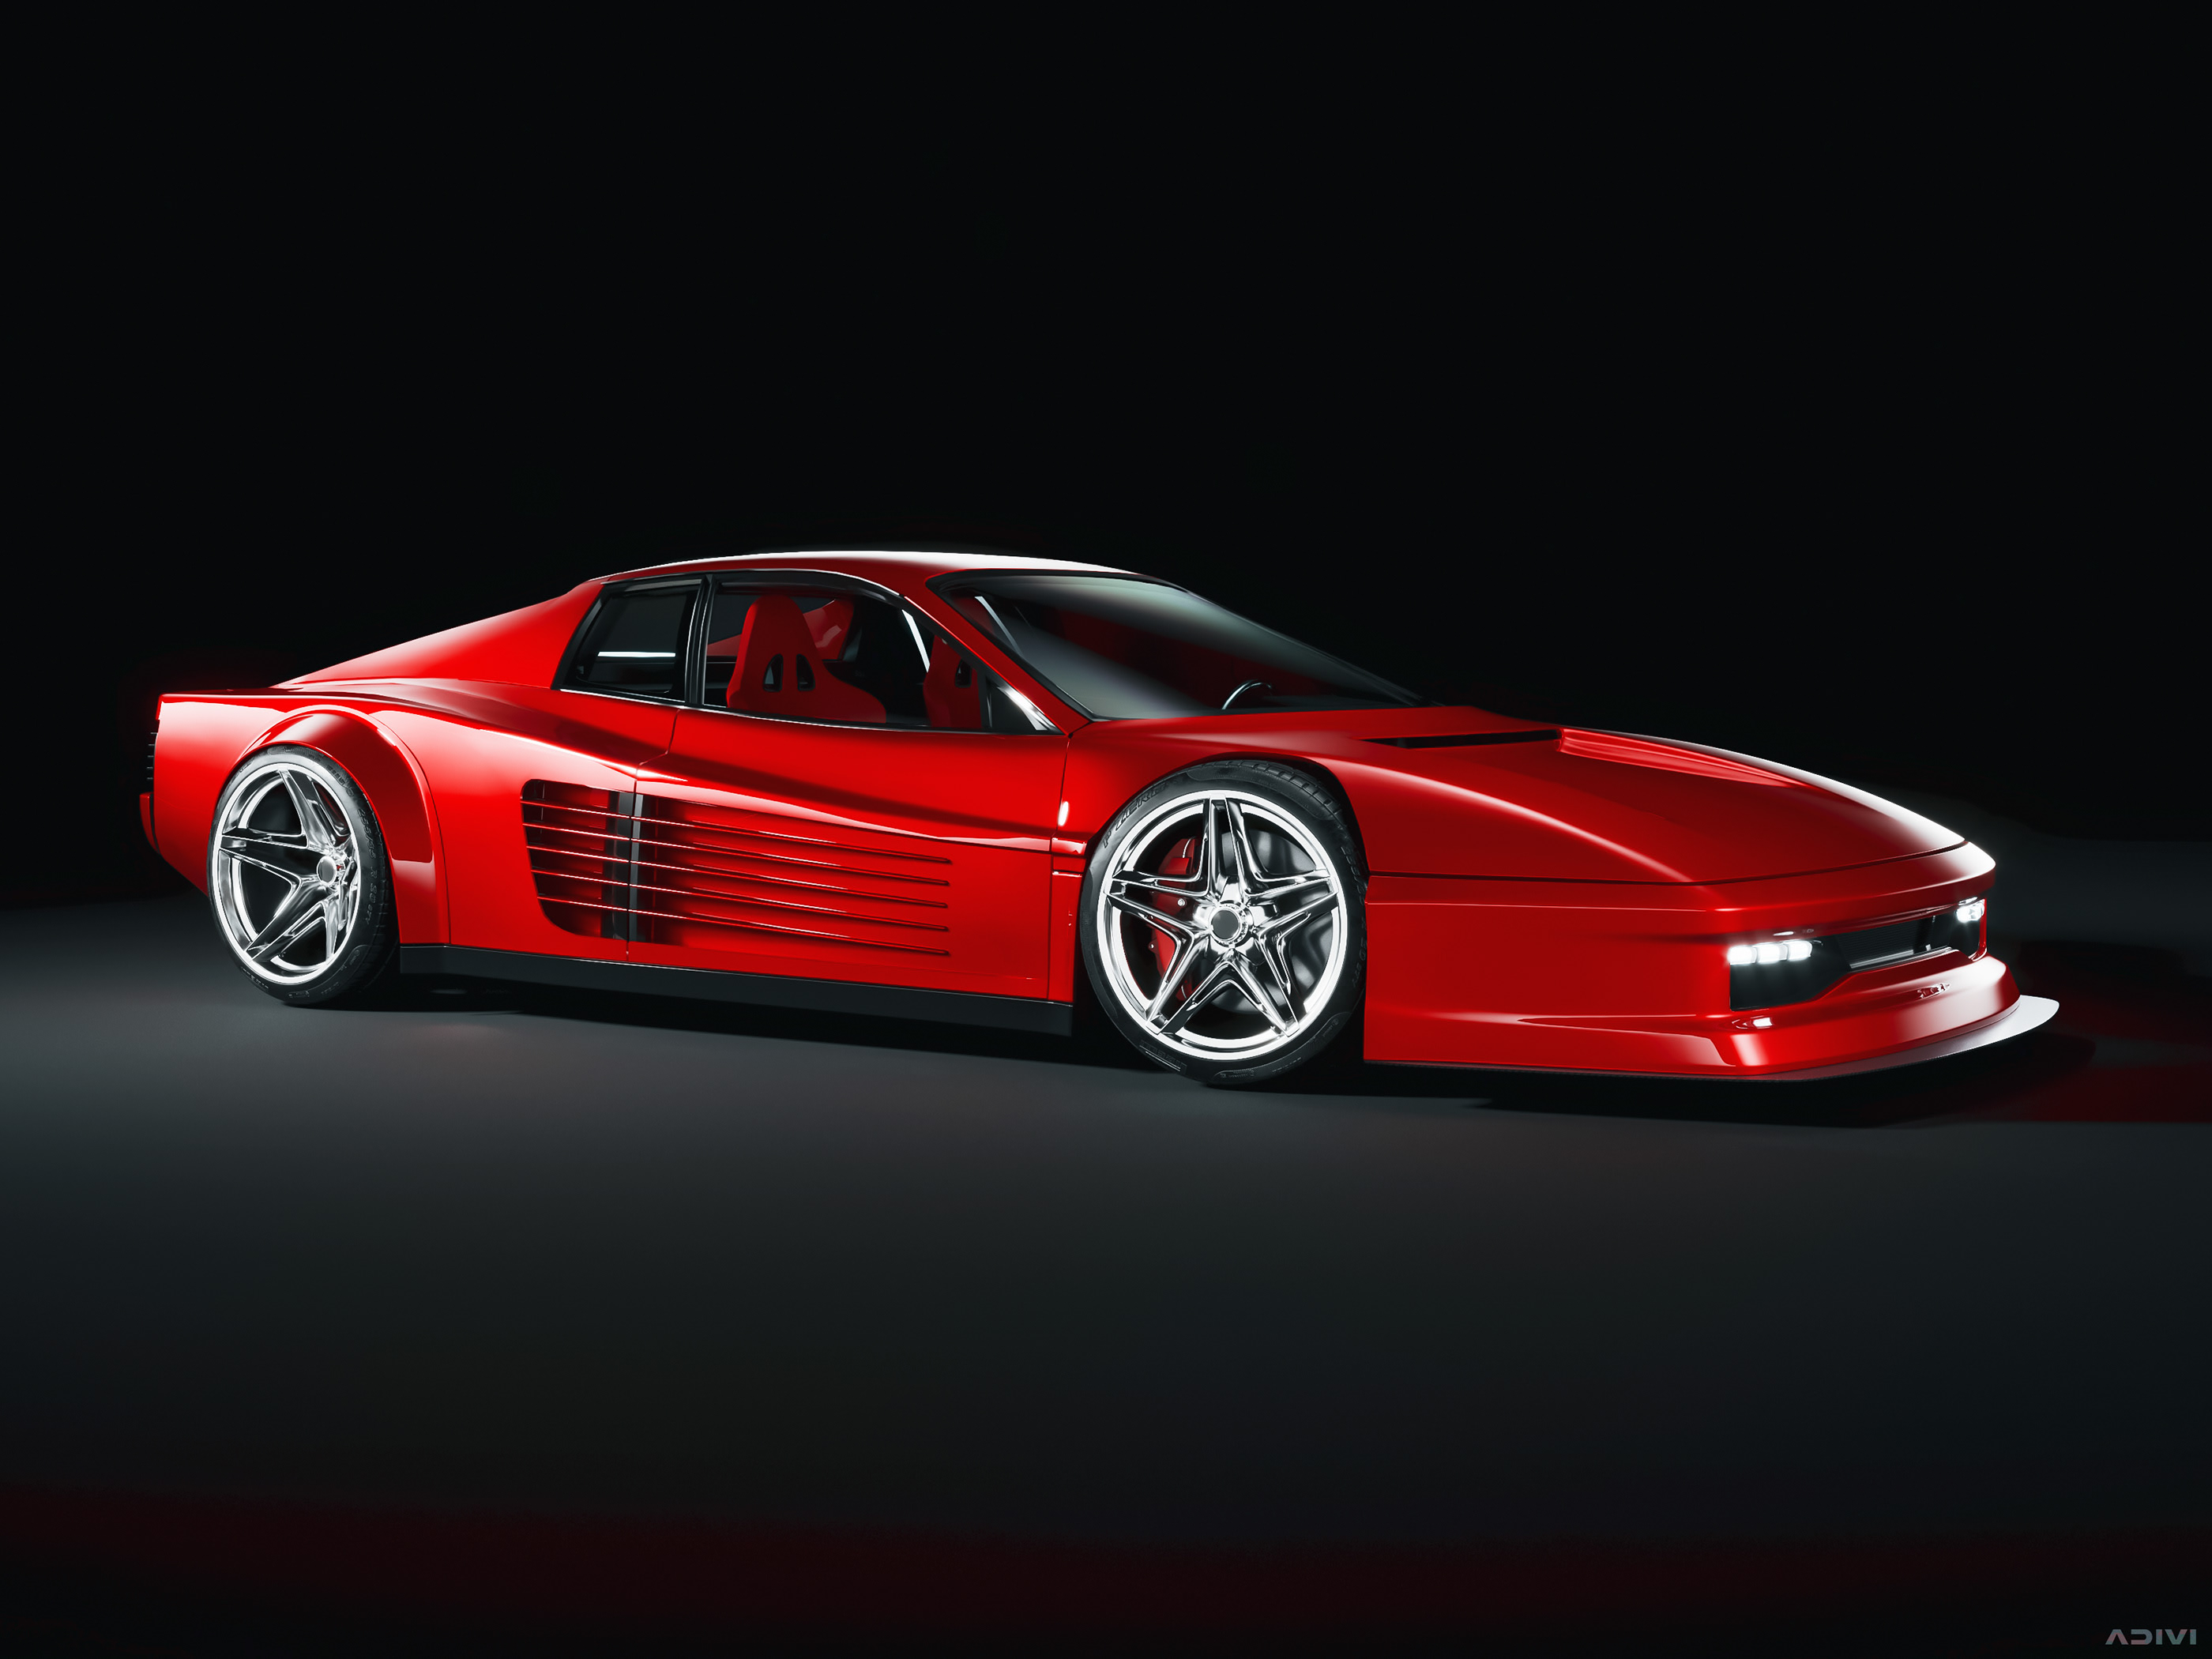 General 2800x2100 Ferrari Ferrari Testarossa concept art concept cars digital art CGI artwork red cars car vehicle supercars italian cars stanced